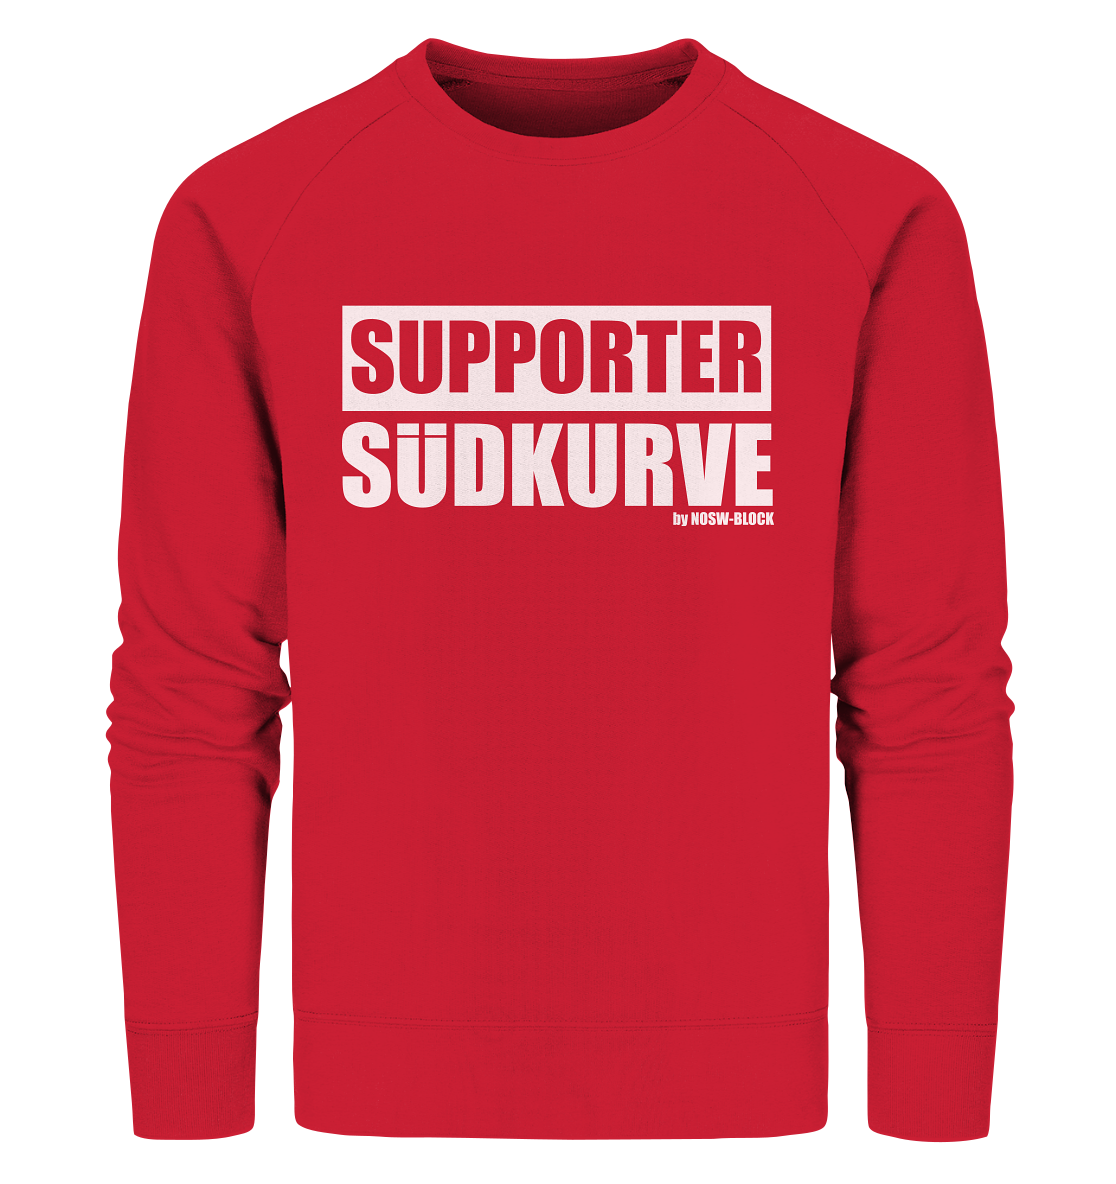 N.O.S.W. BLOCK Fanblock Sweater "SUPPORTER SÜDKURVE" Männer Organic Sweatshirt rot